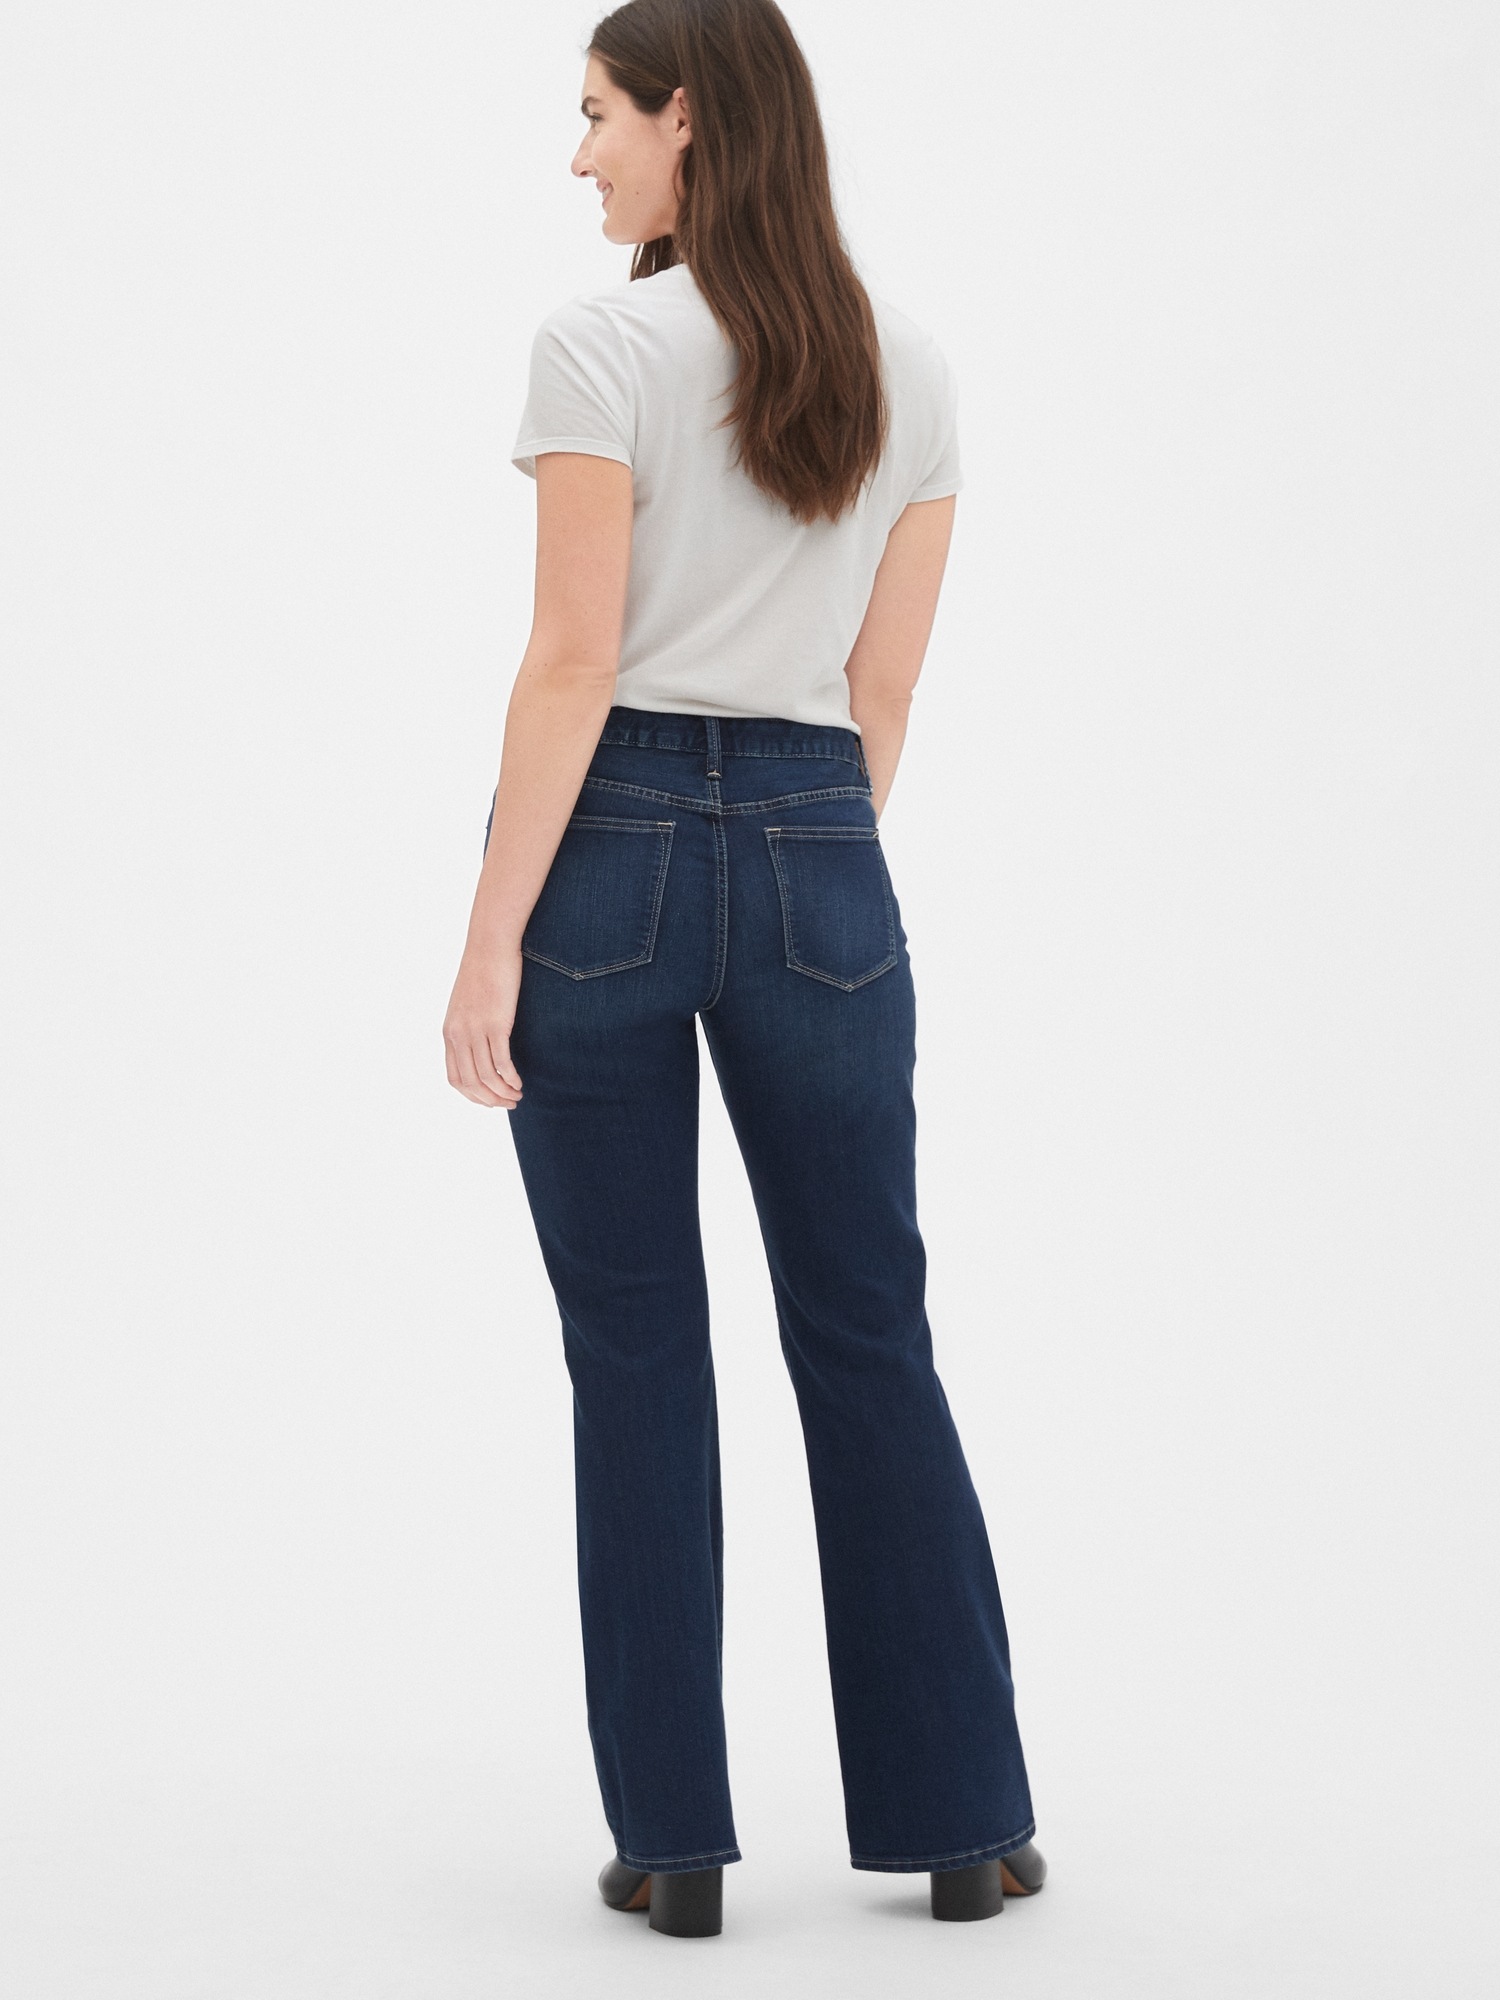 gap women's long and lean jeans